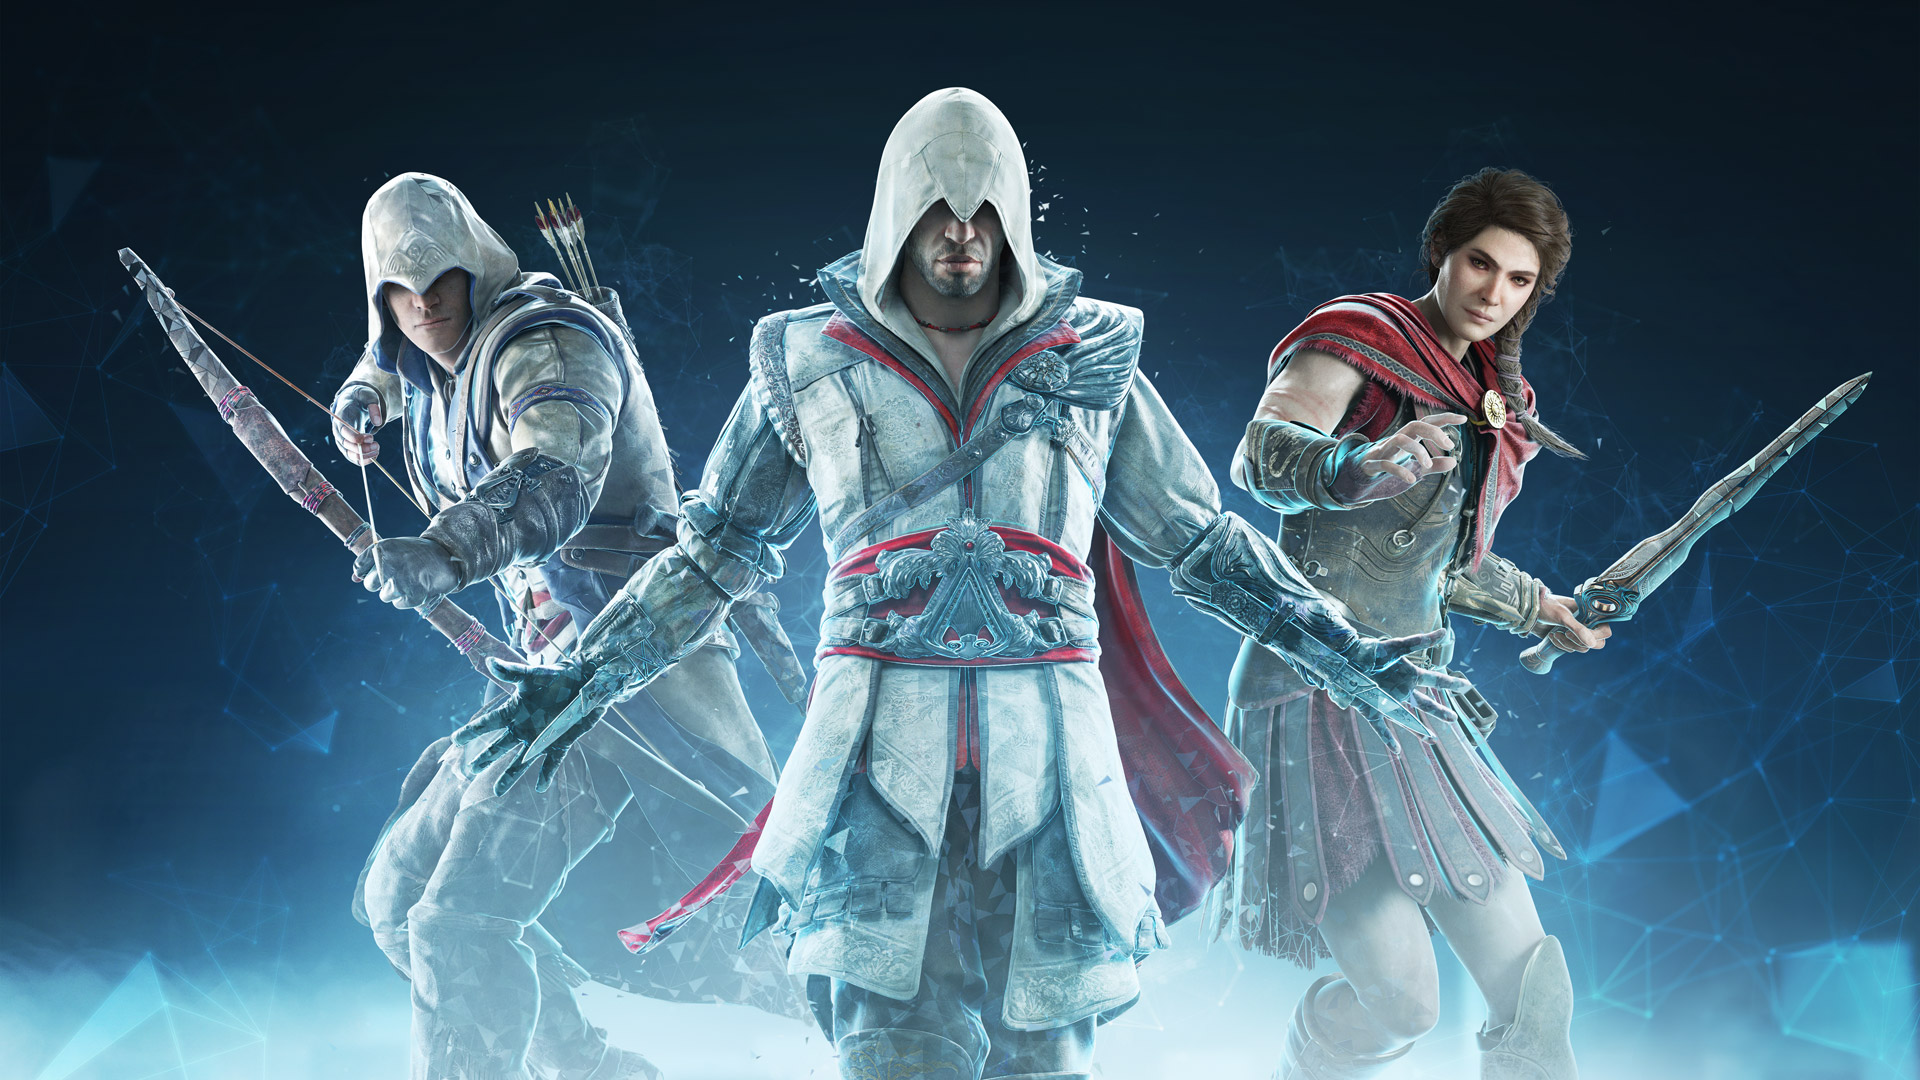 THIS GAME SUCKS: Assassin's Creed III 